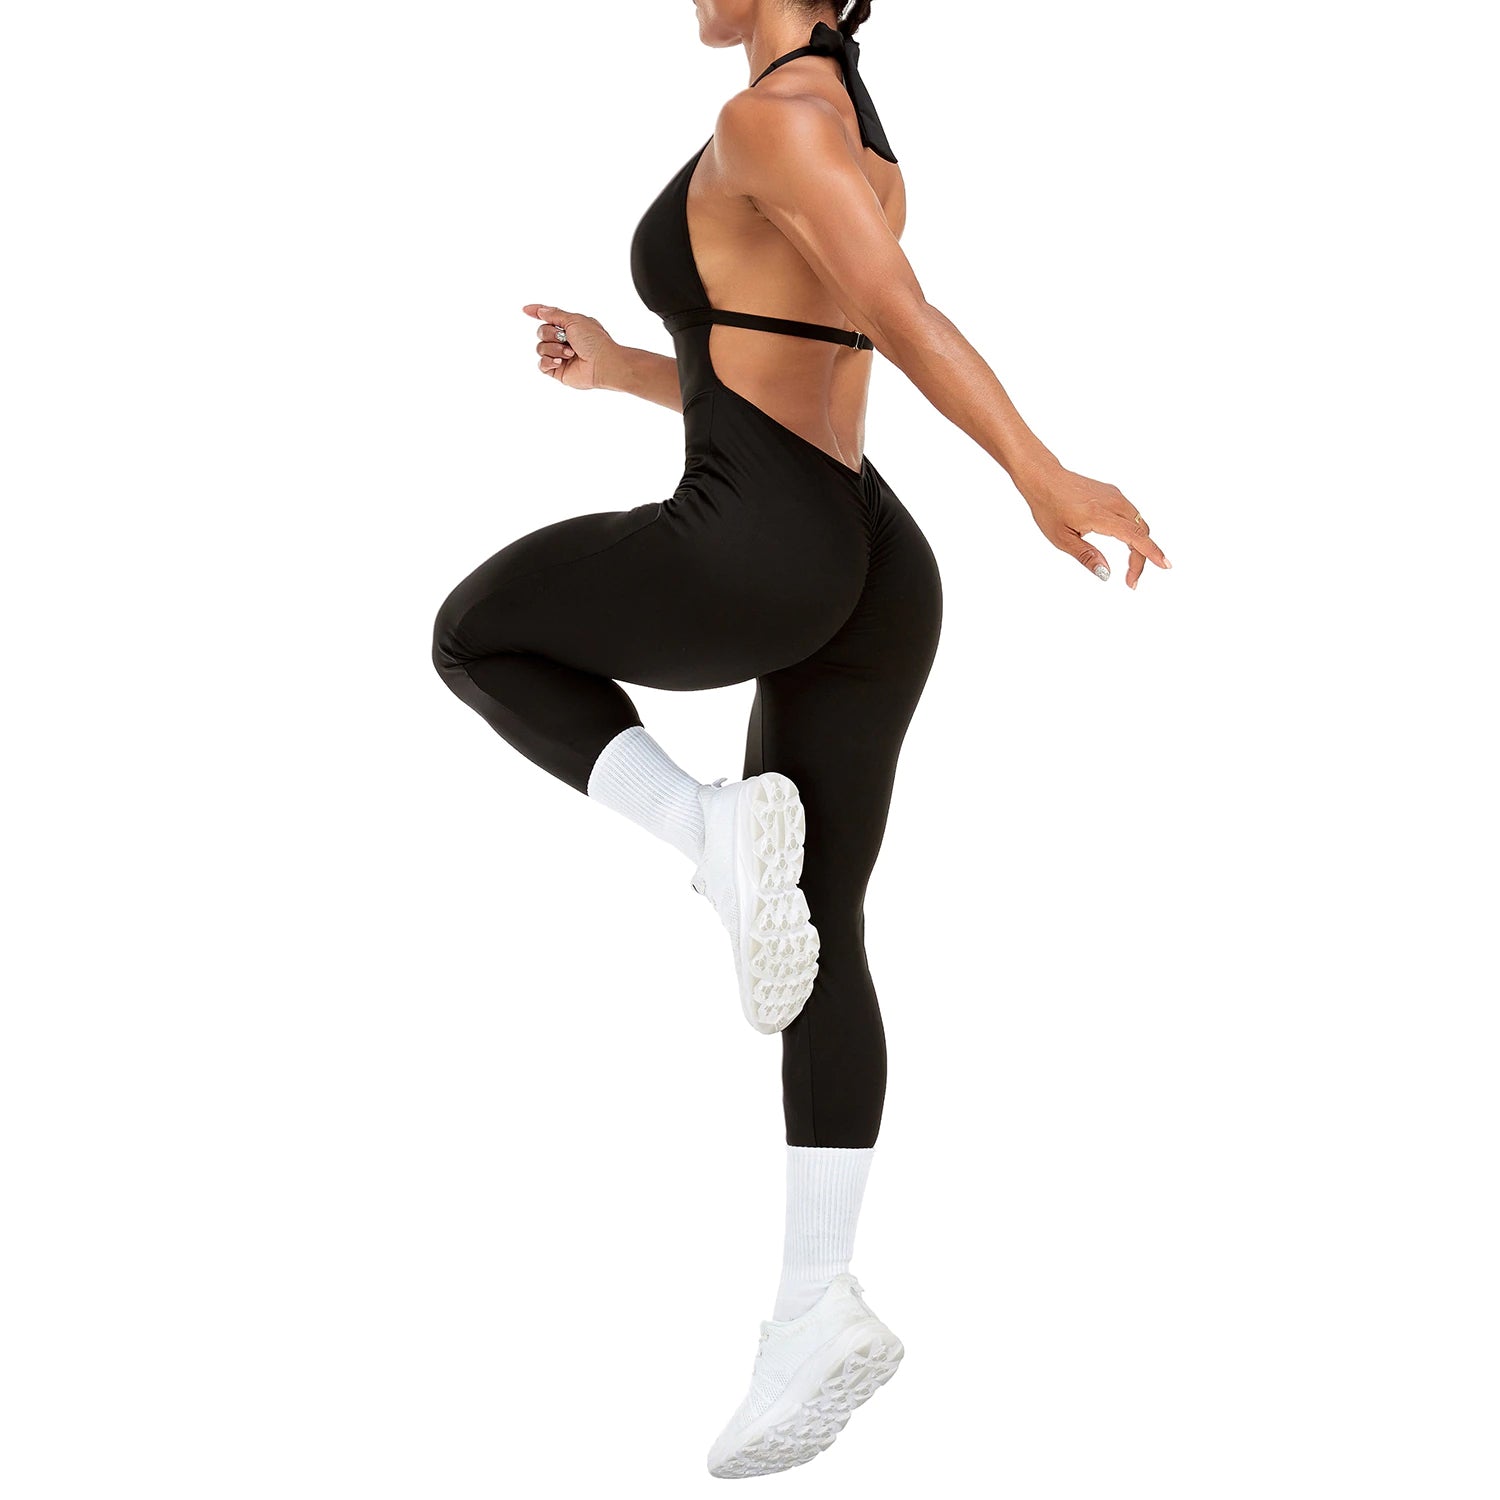 Women's Jumpsuit Onesie Workout Sets Bodysuit Yoga Fitness Gym